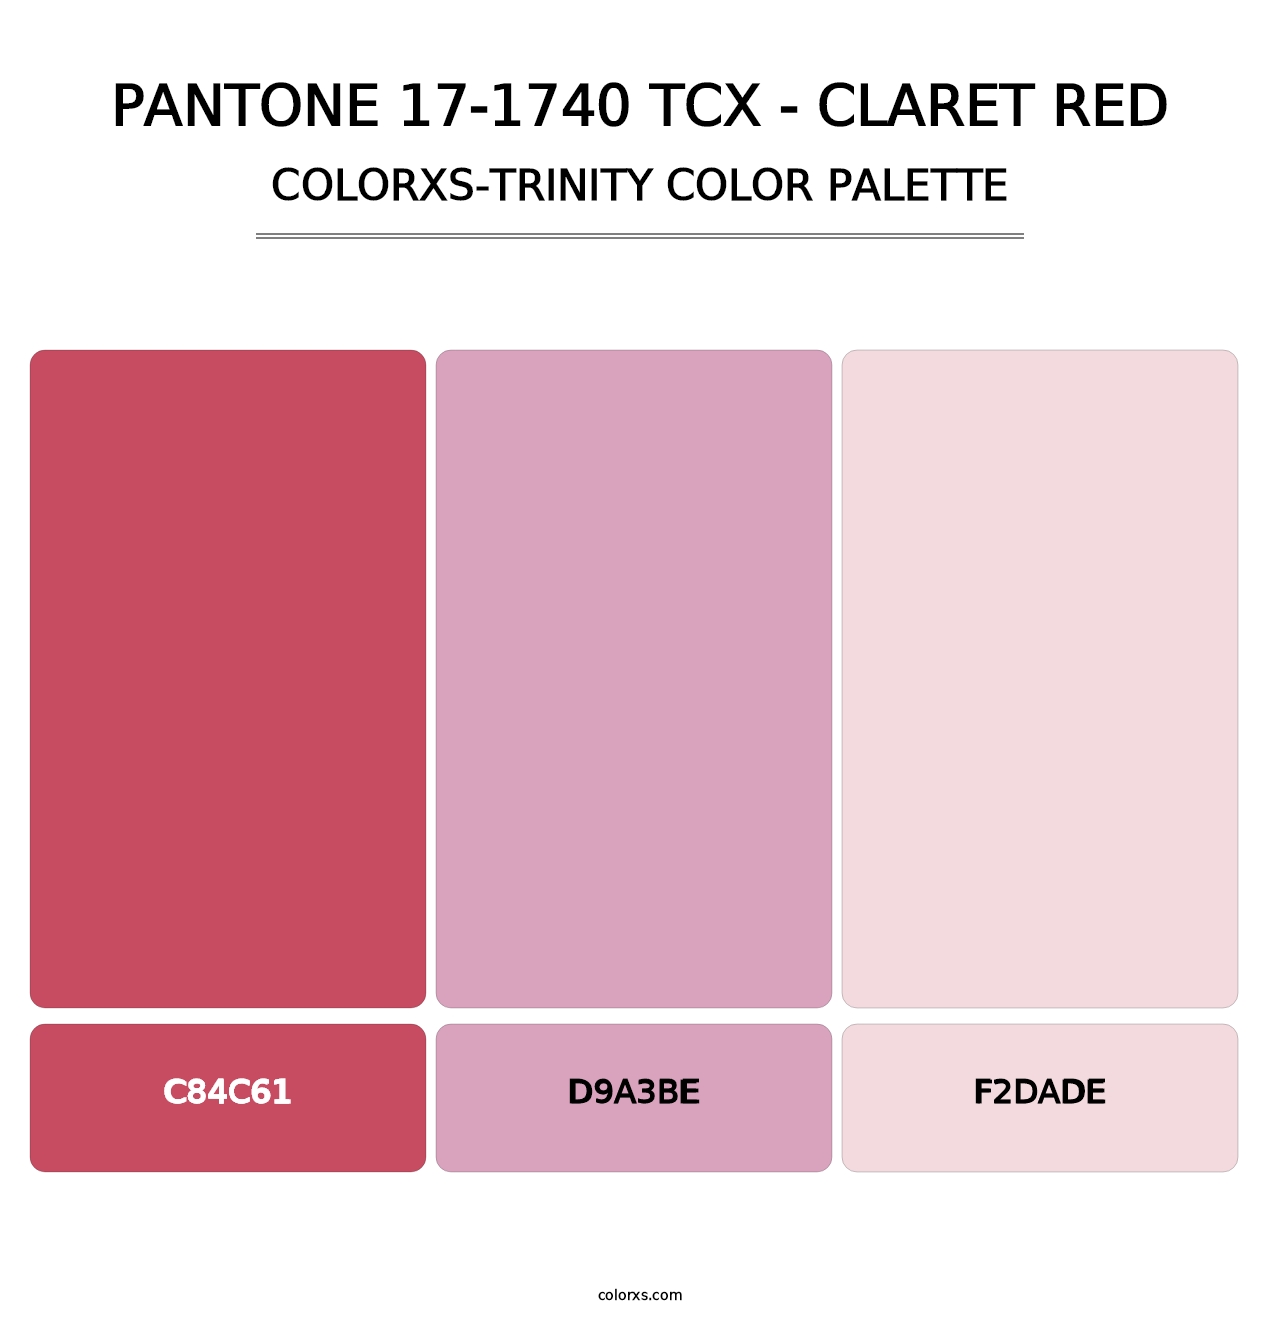 PANTONE 17-1740 TCX - Claret Red - Colorxs Trinity Palette